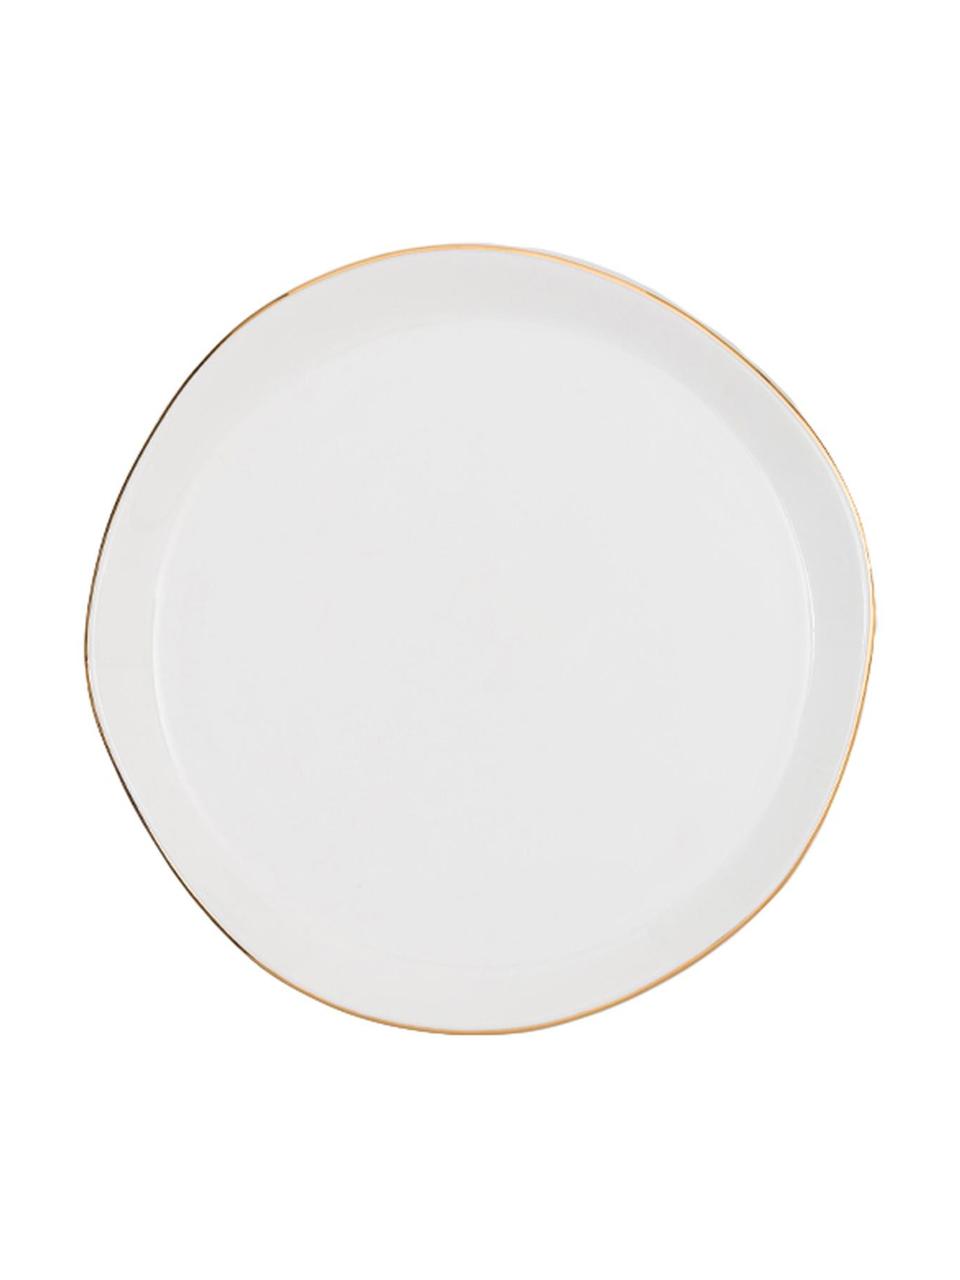 Dessertbord Good Morning in wit met goudkleurige rand, Ø 17 cm, Porselein, Wit, goudkleurig, Ø 17 cm